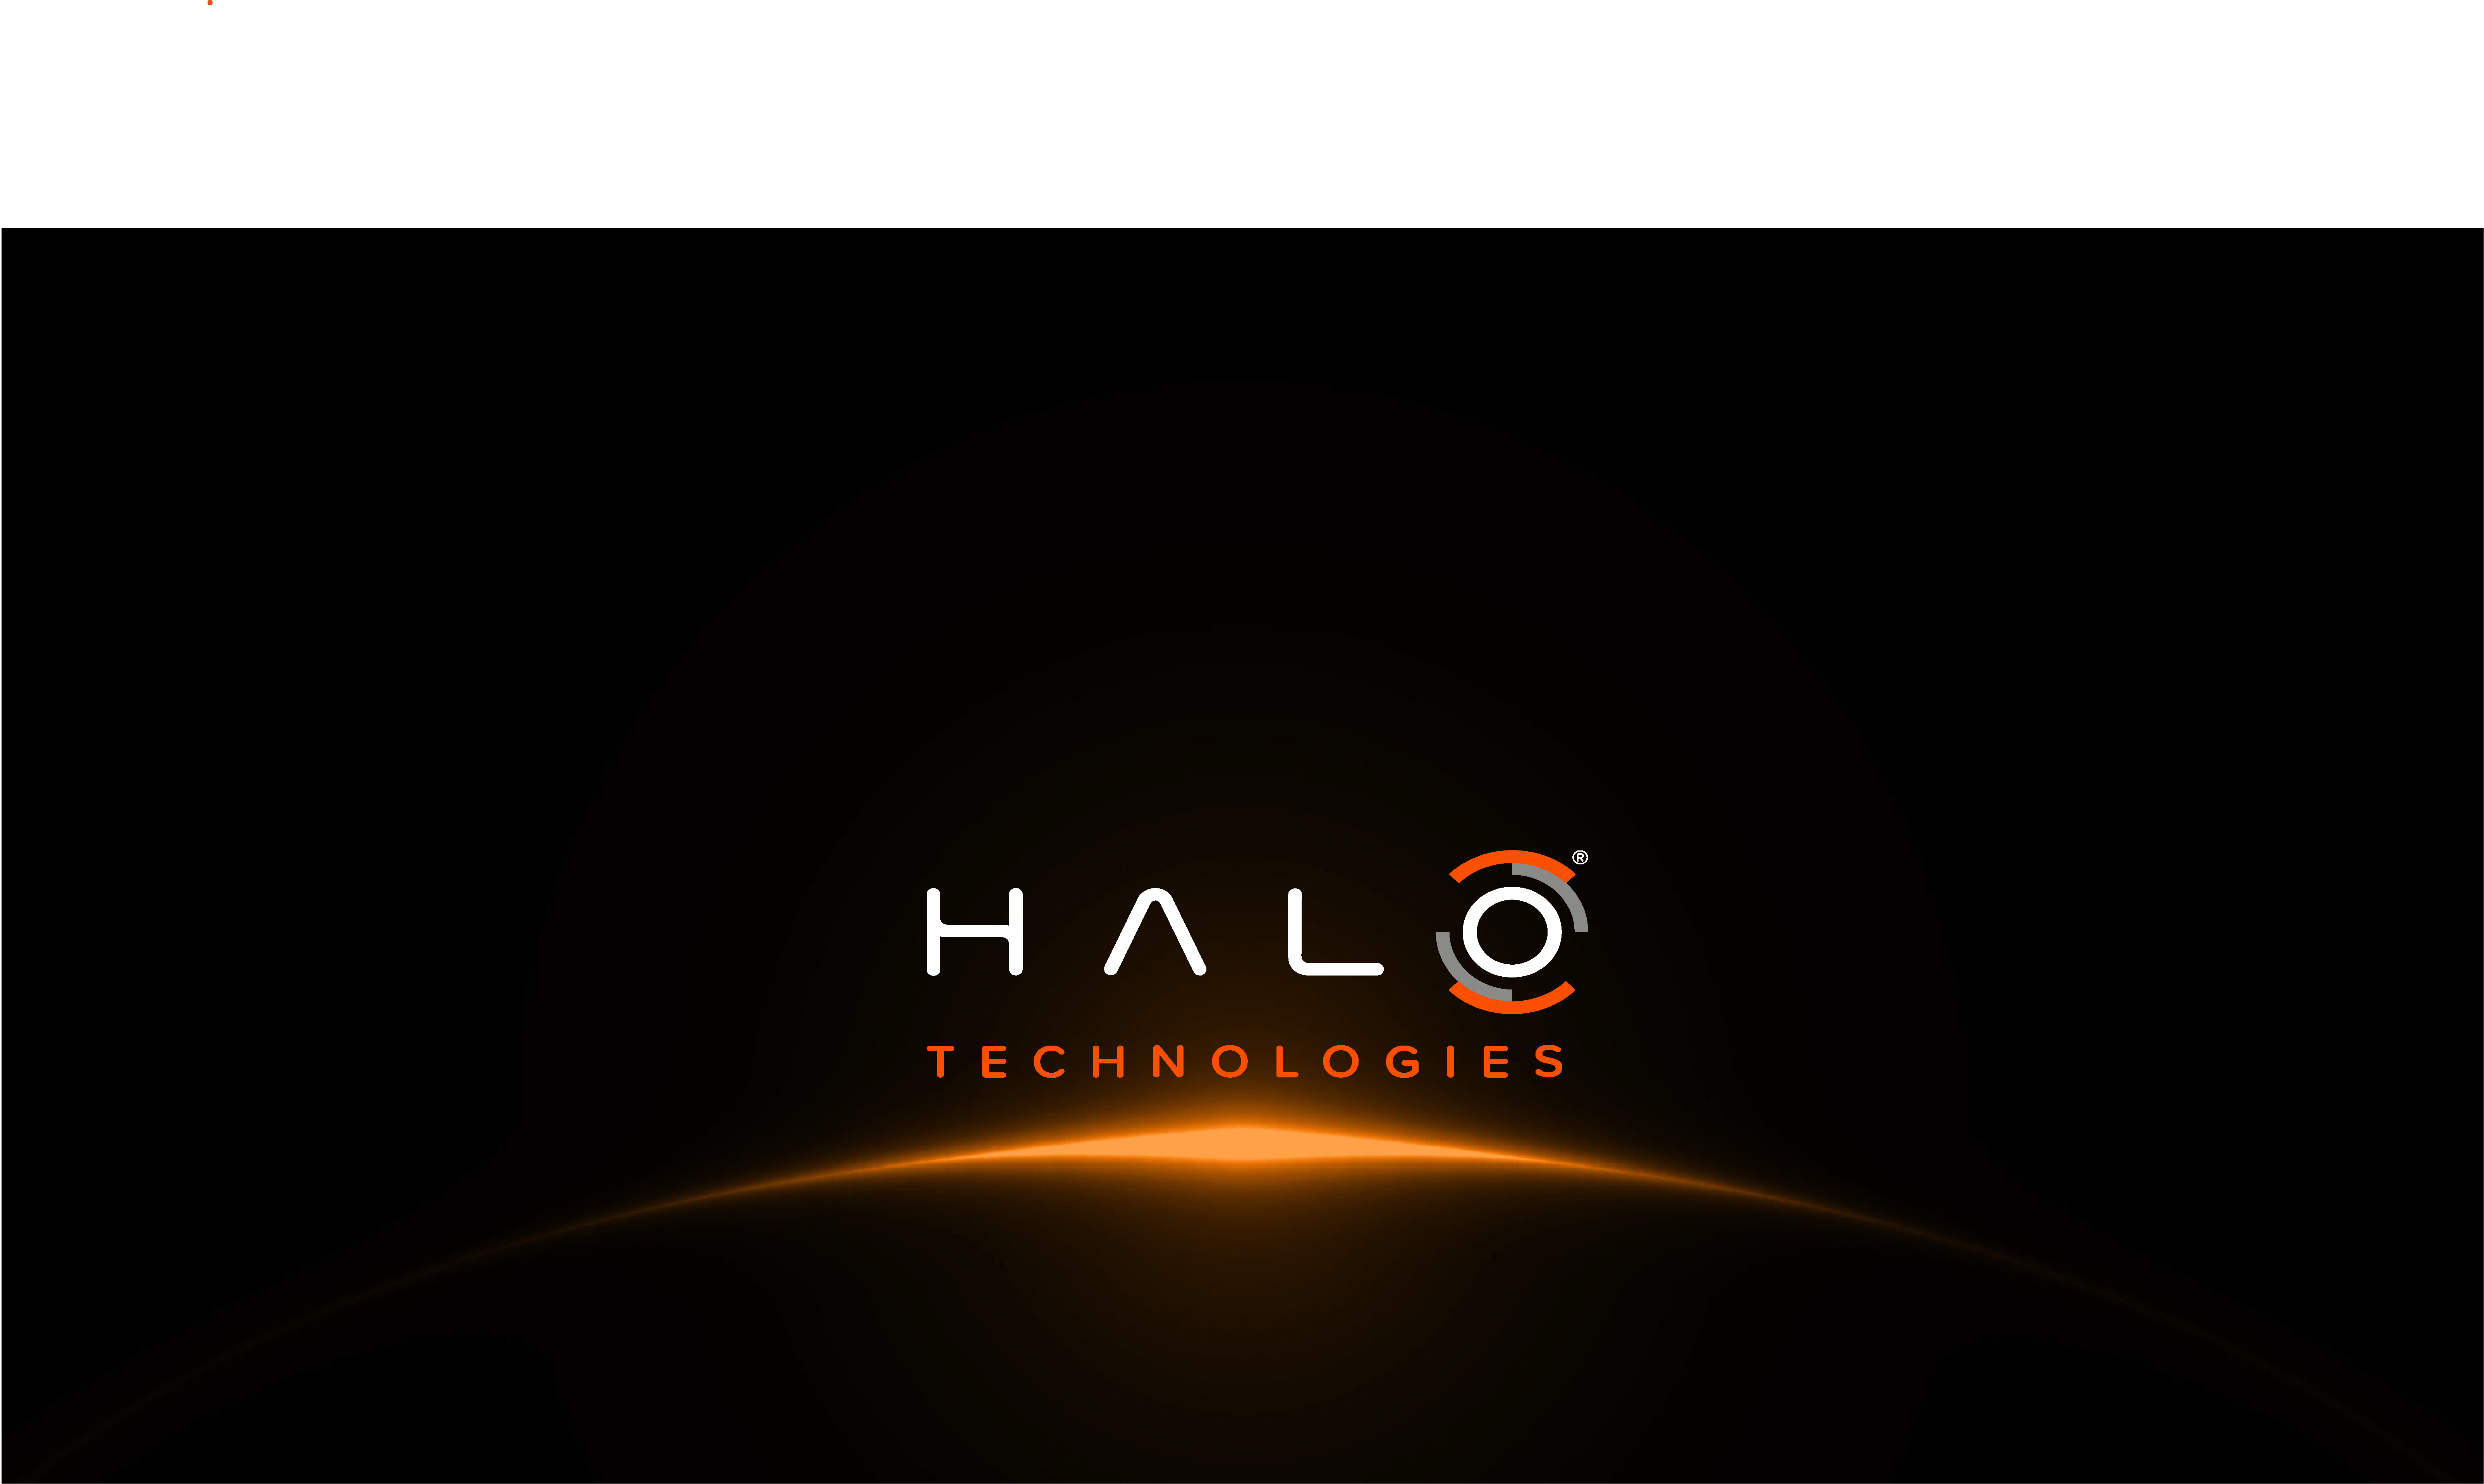 Halo Technologies Europe Ltd